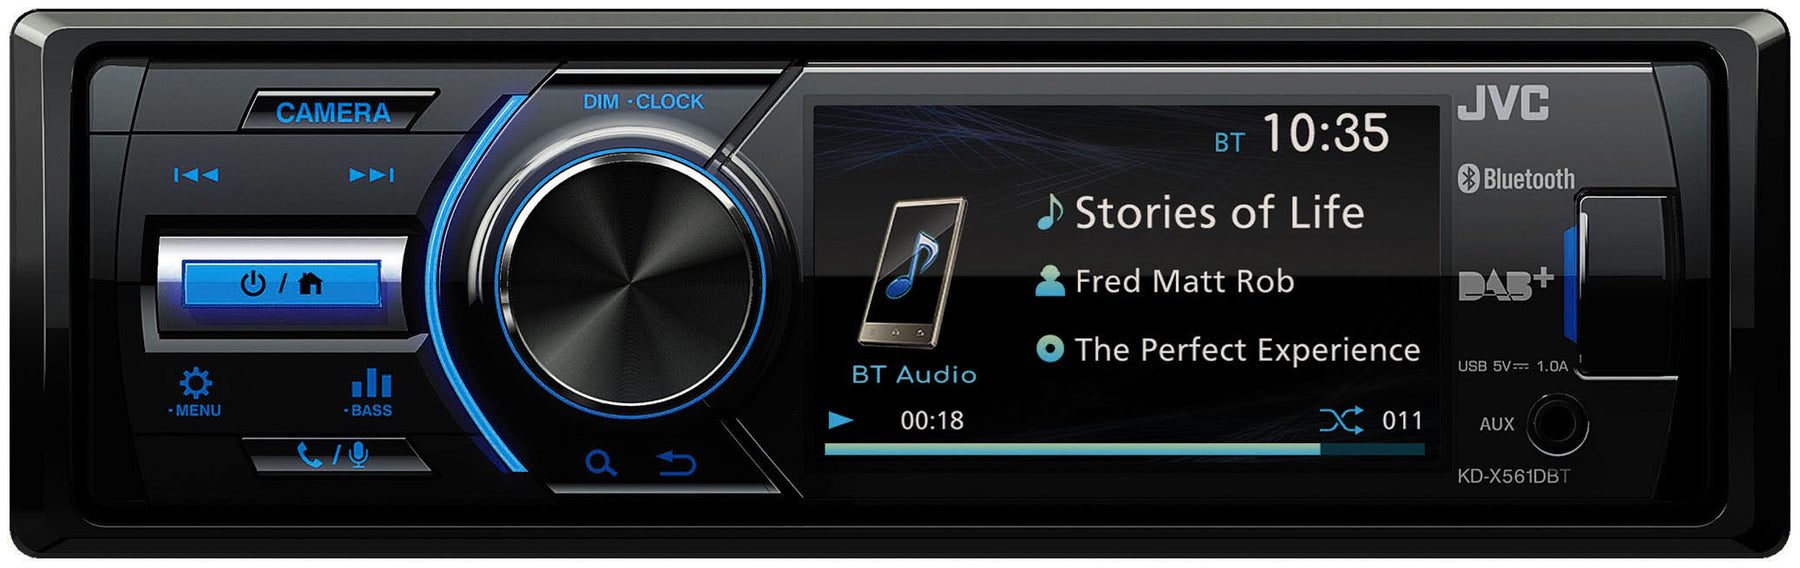 JVC KD-X561DBT Autoradio mechaless con monitor da 3.0" , Built-In DAB Tuner and Built-in e Bluetooth® Wireless Technology per viva voce e streaming audio